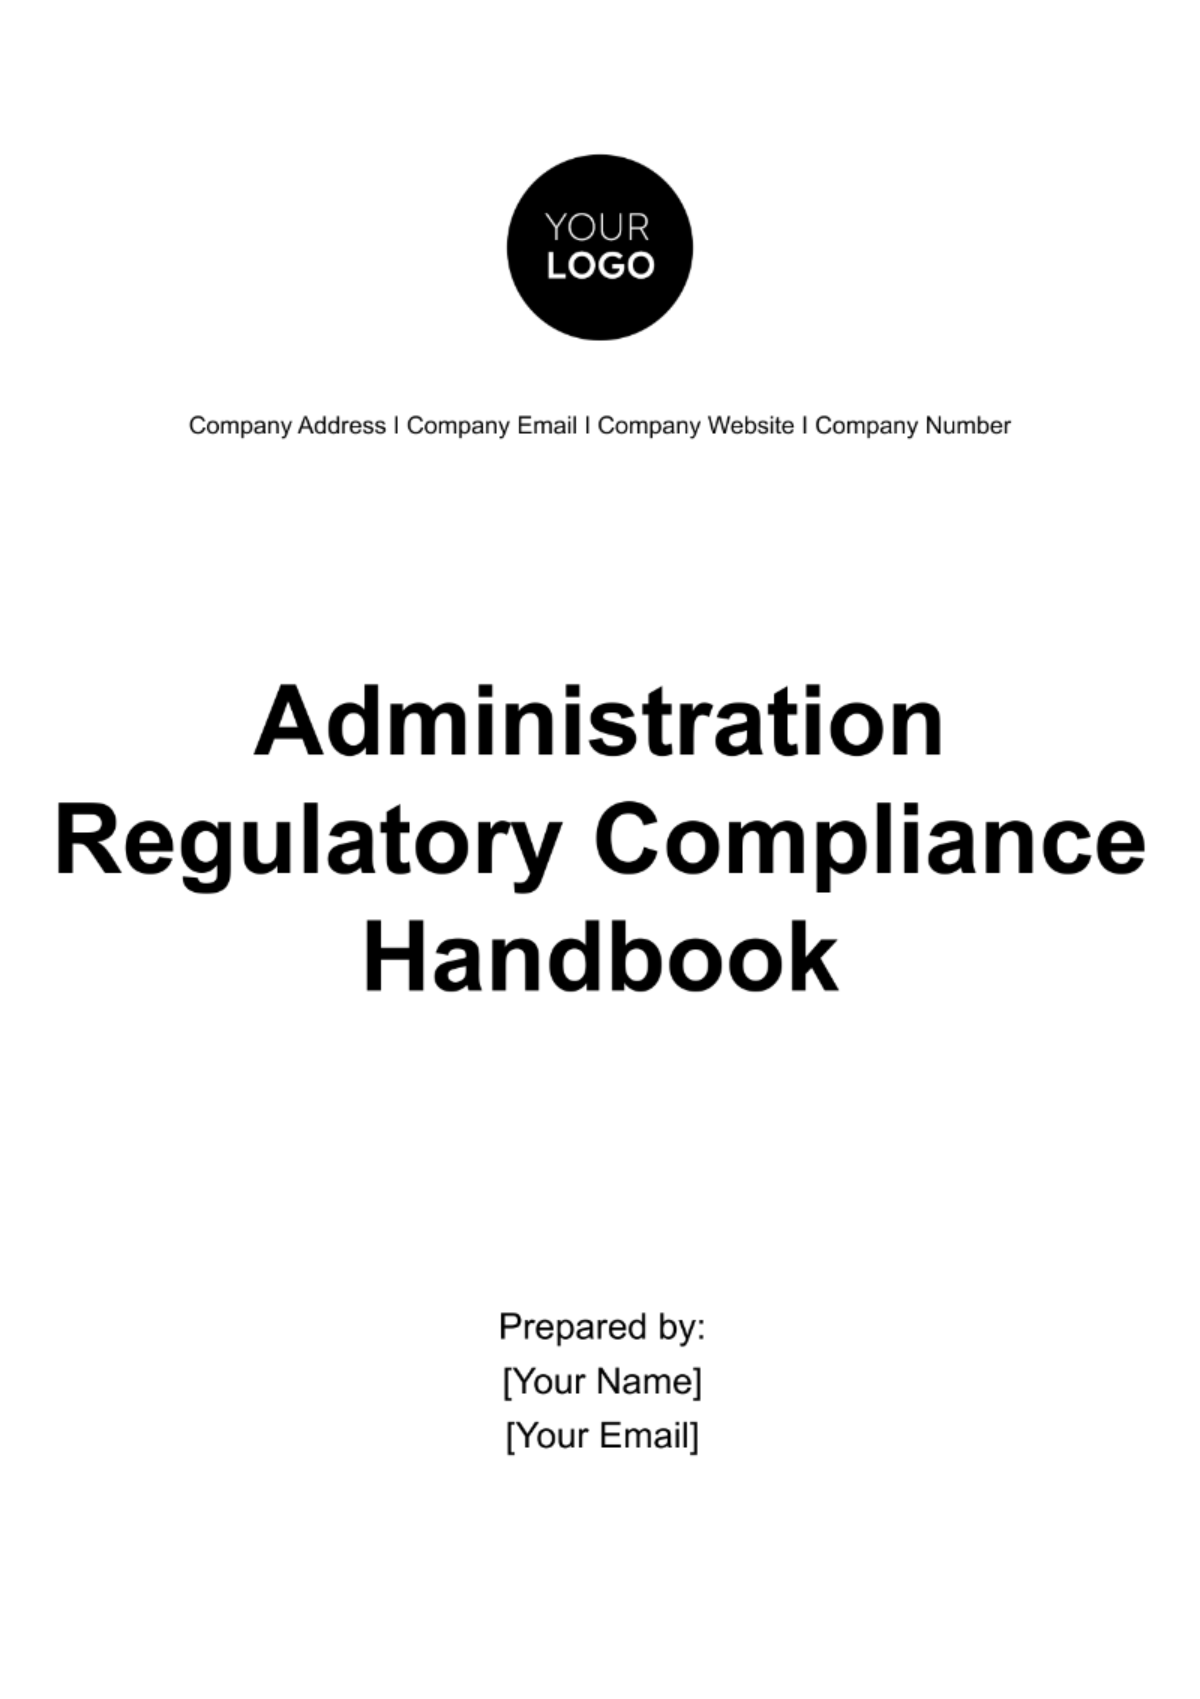 Administration Regulatory Compliance Handbook Template